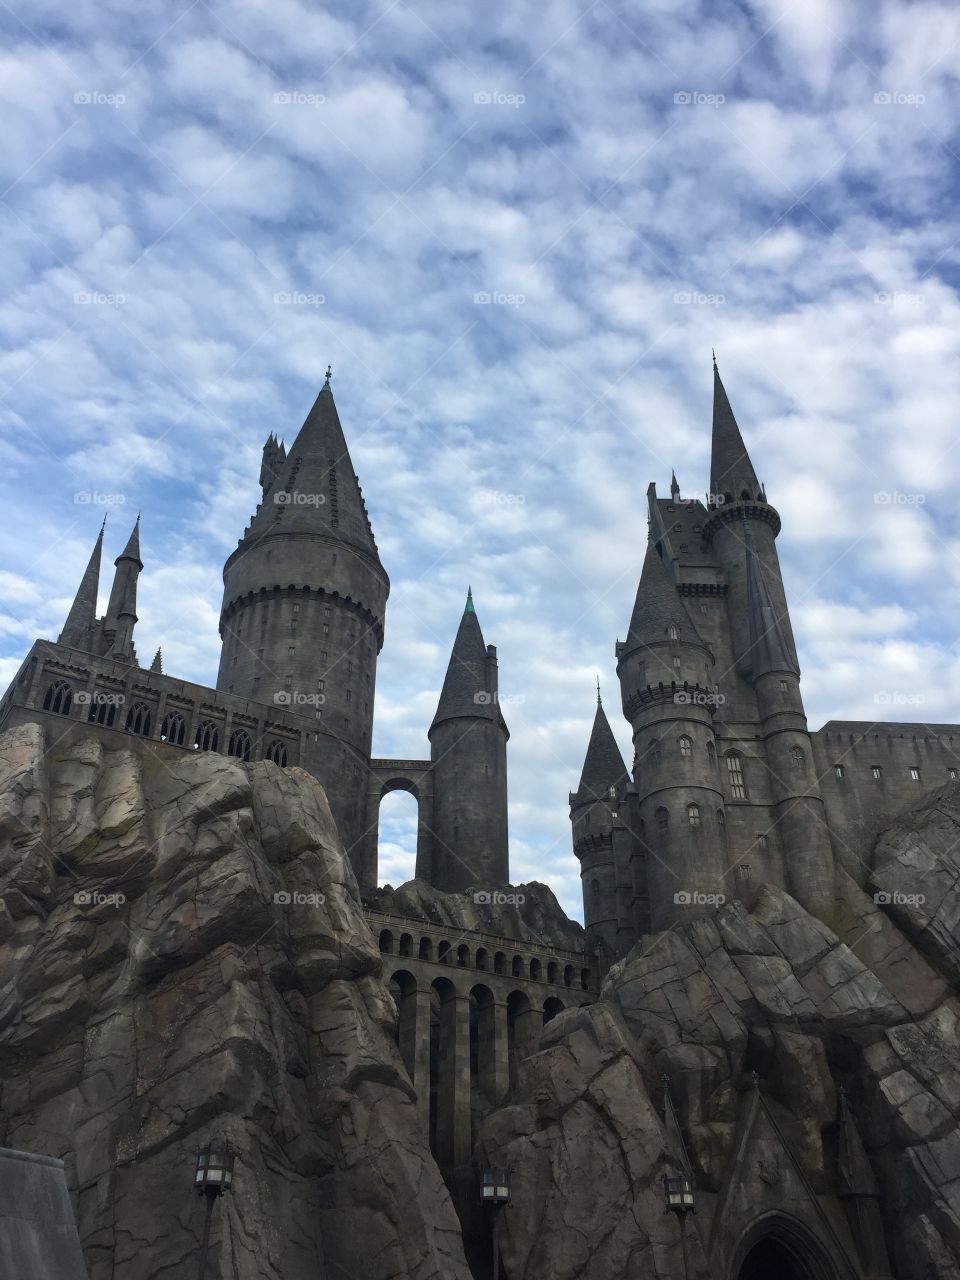 Hogwarts castle 